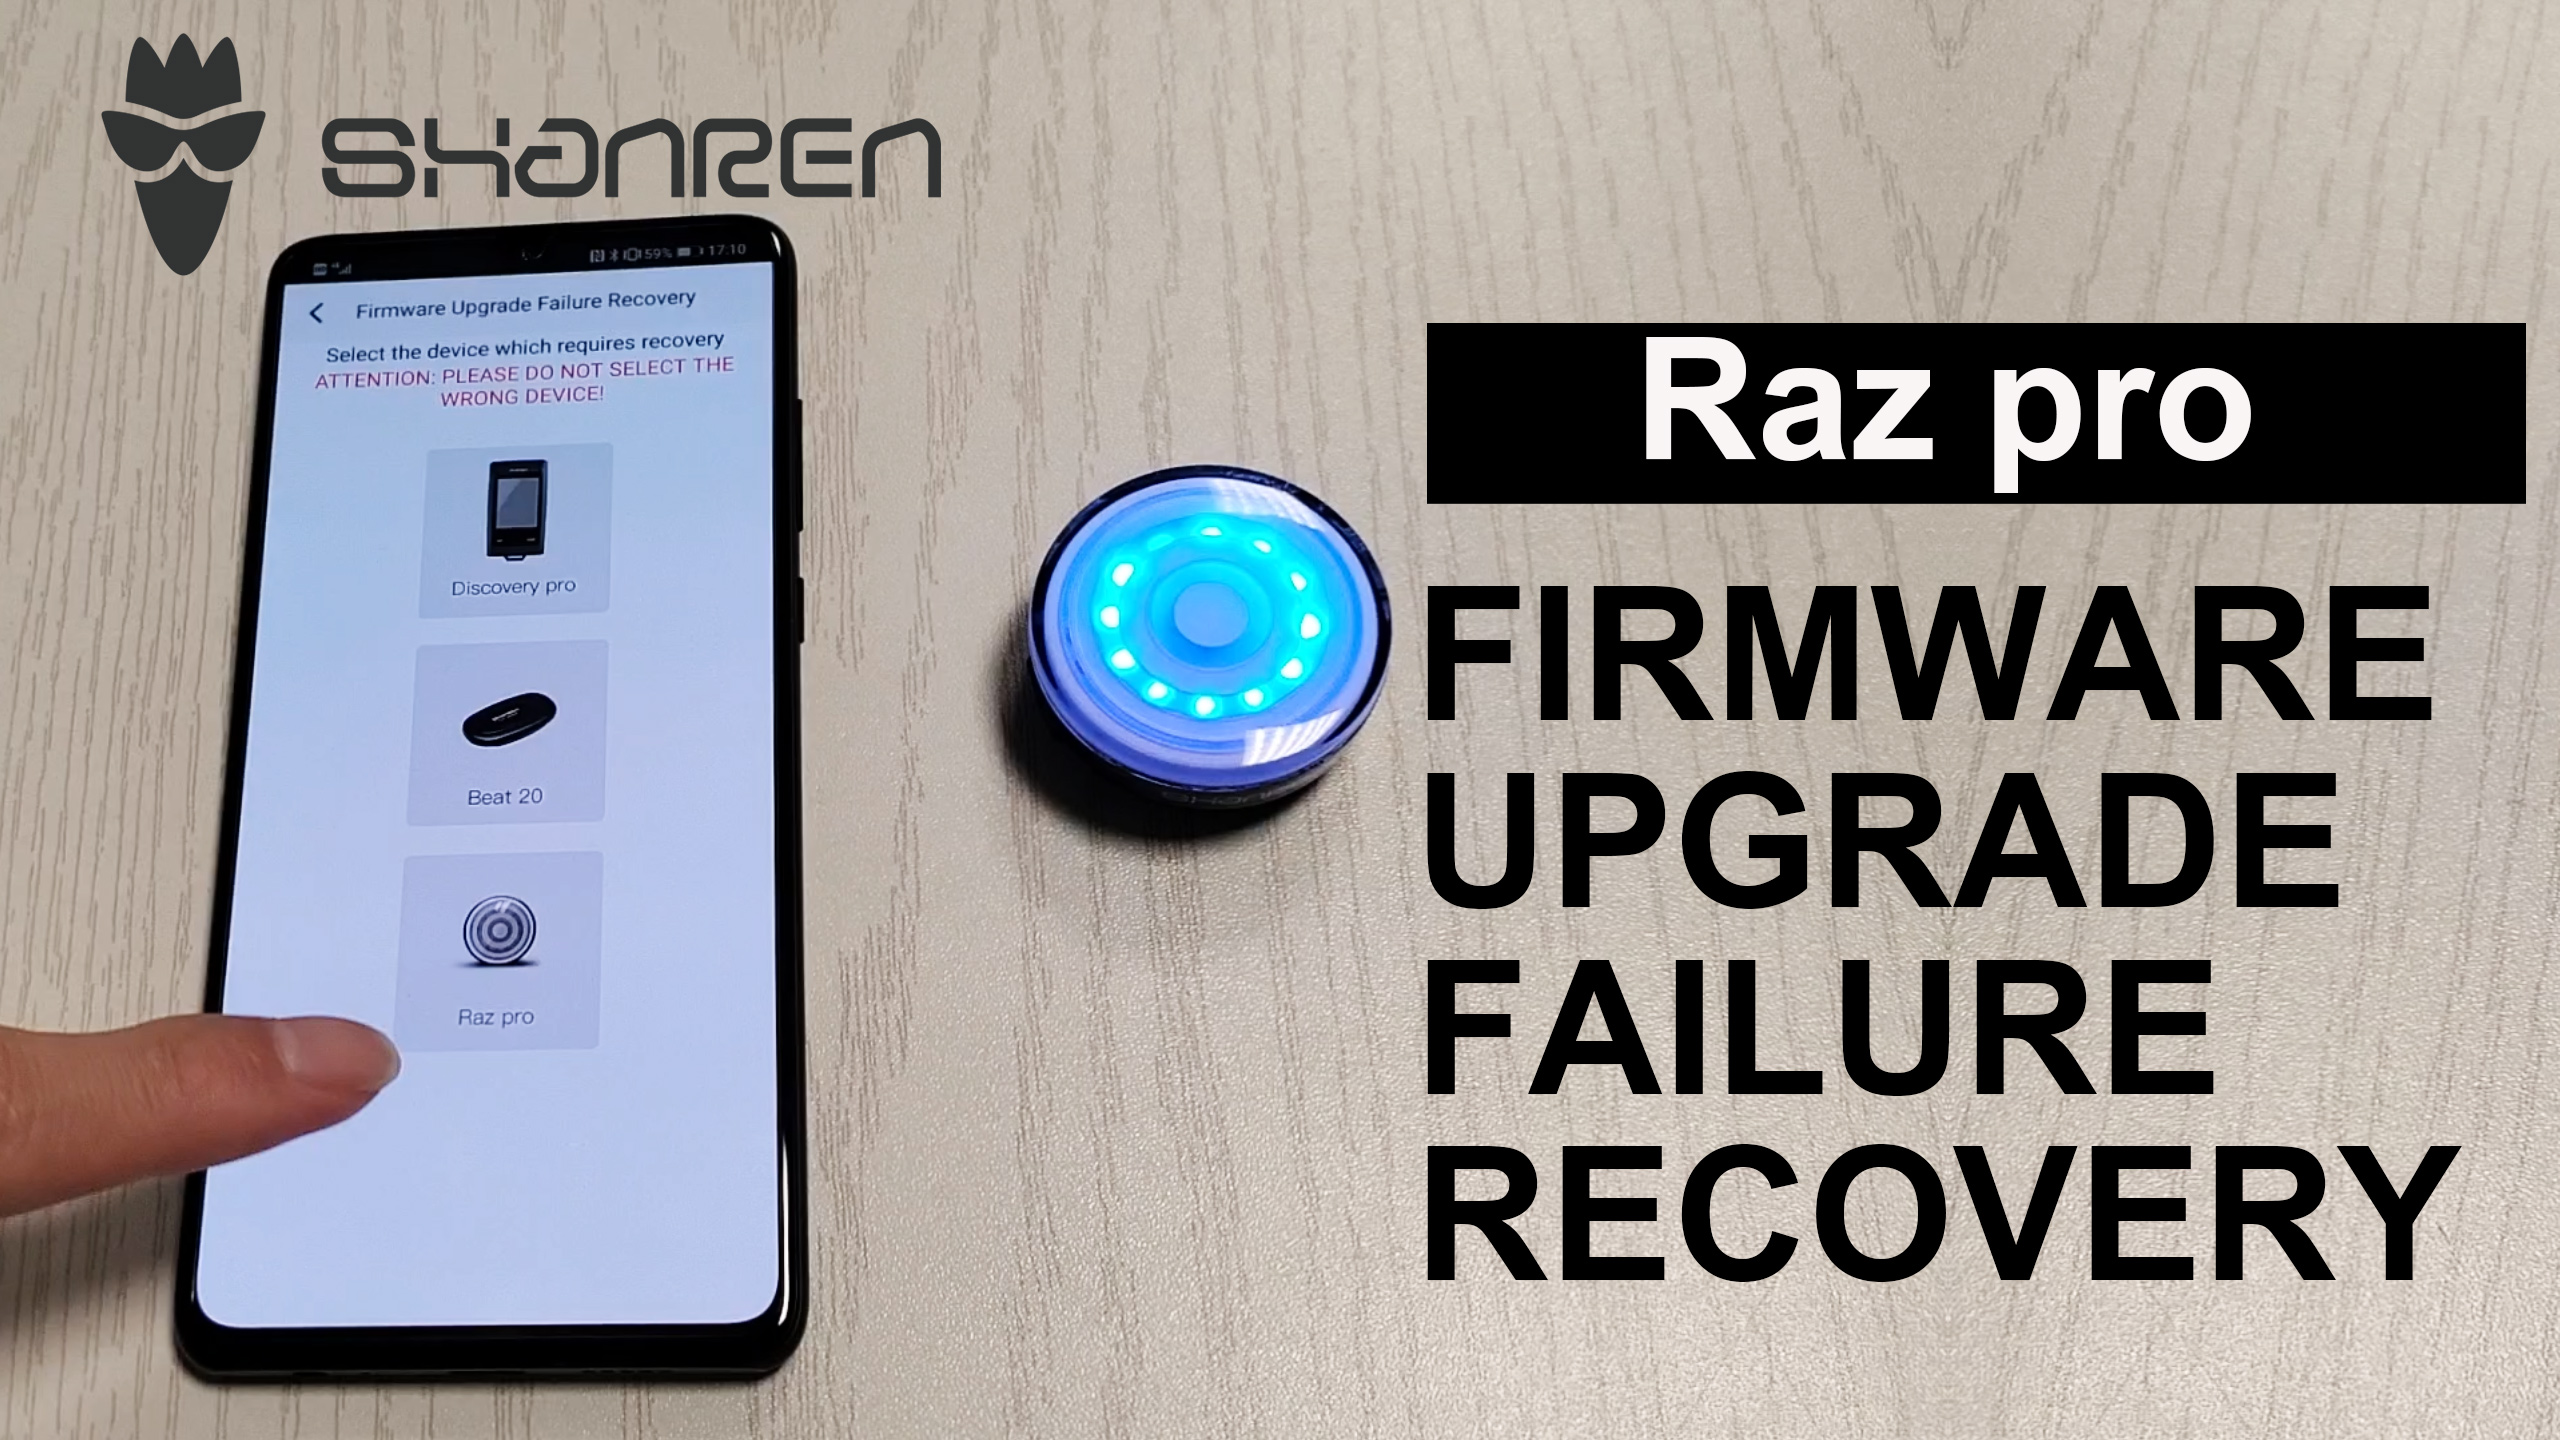 Raz pro firmware recovery